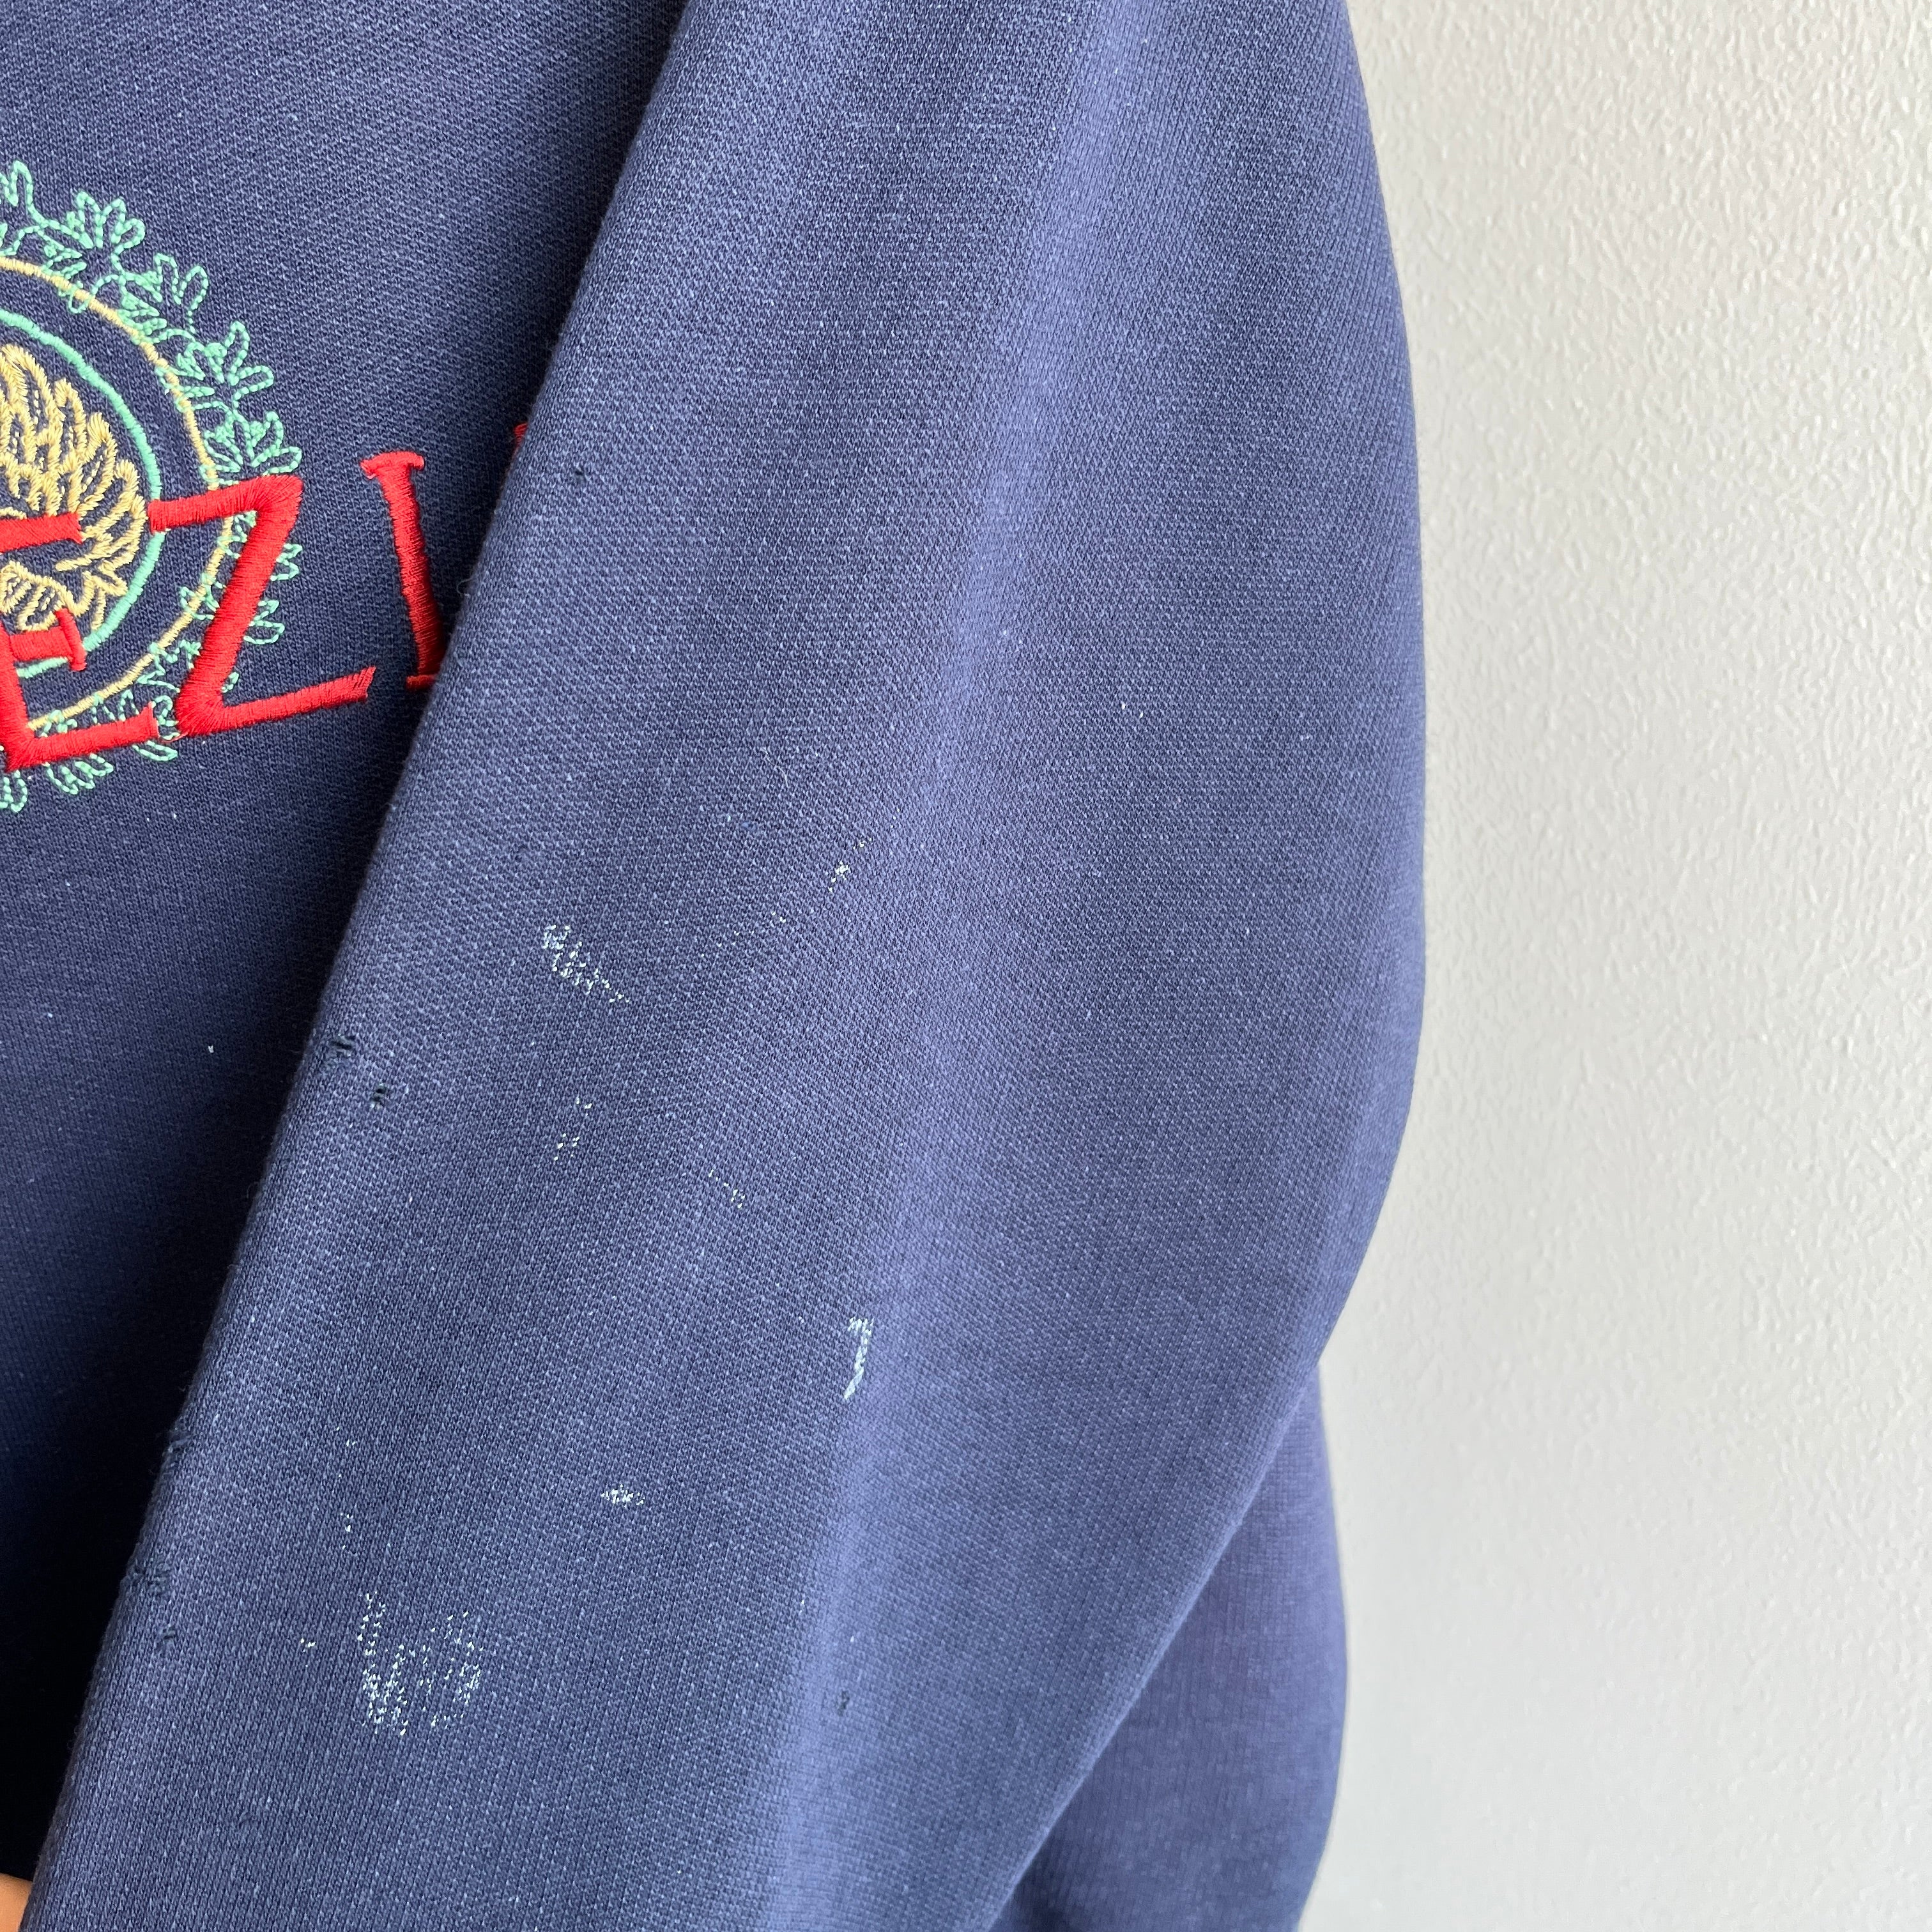 1980/90s Venezia Super Thrashed Sweatshirt